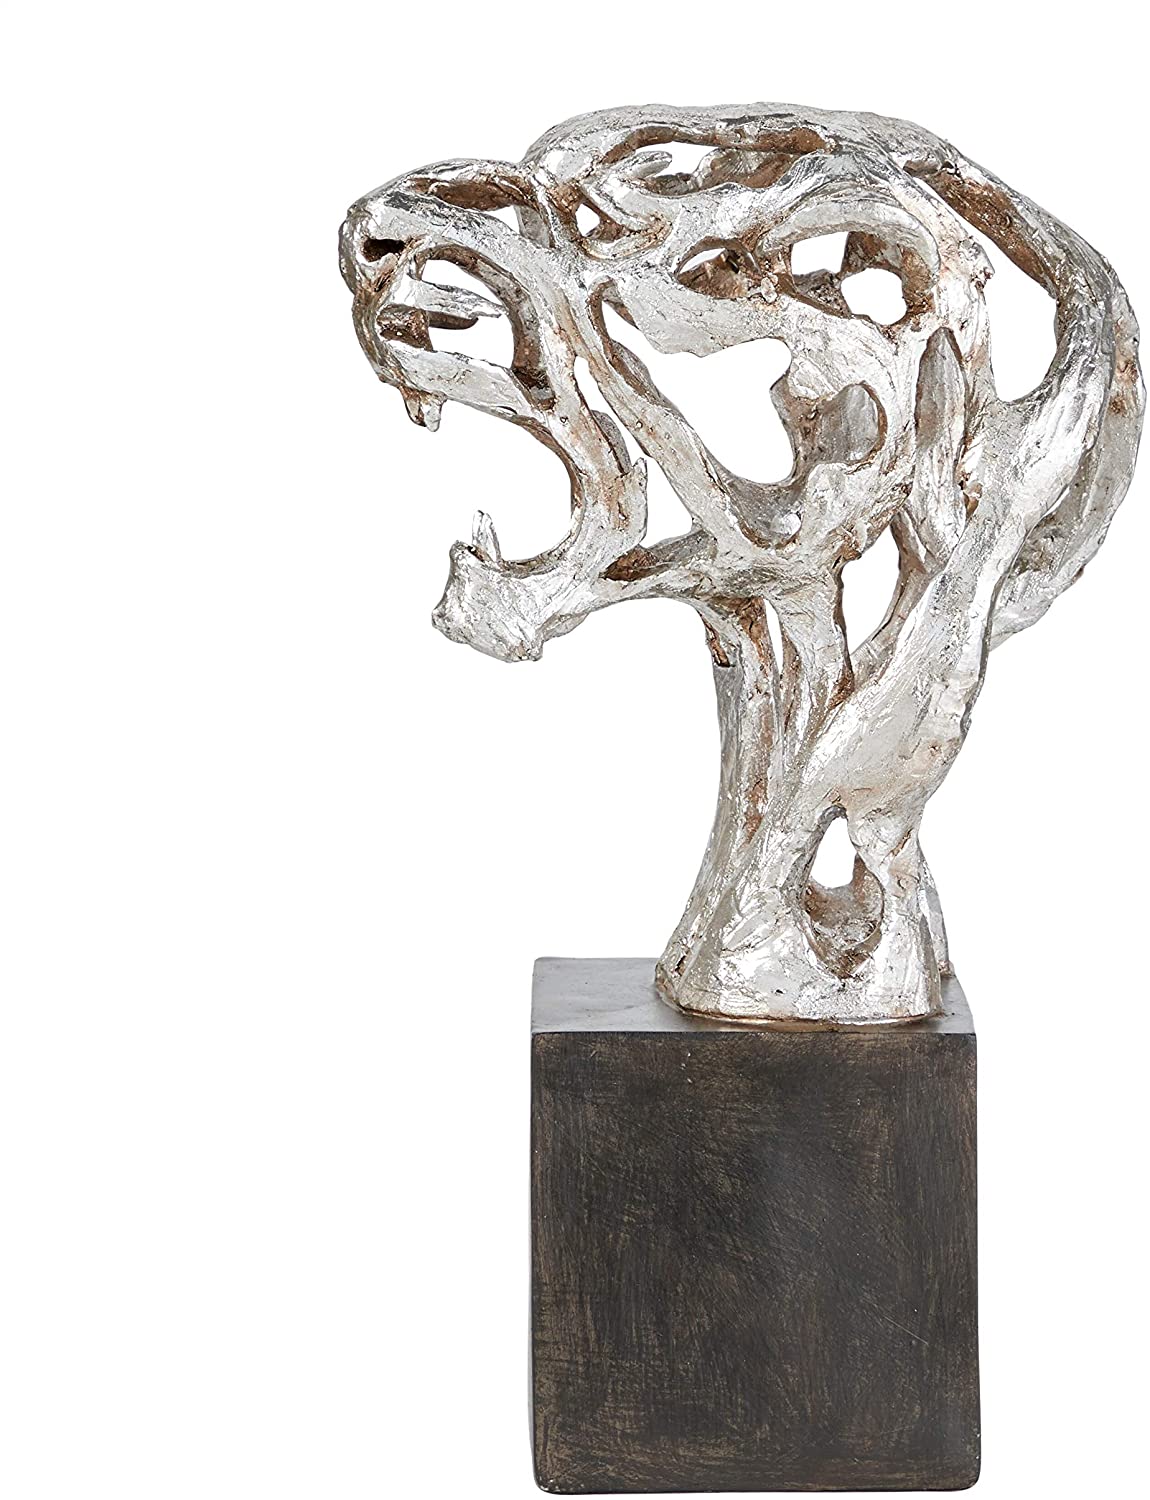 UKN Silver Resin Abstract Leopard Sculpture W Black Rectangular Base 9 X 7 16 Transitional